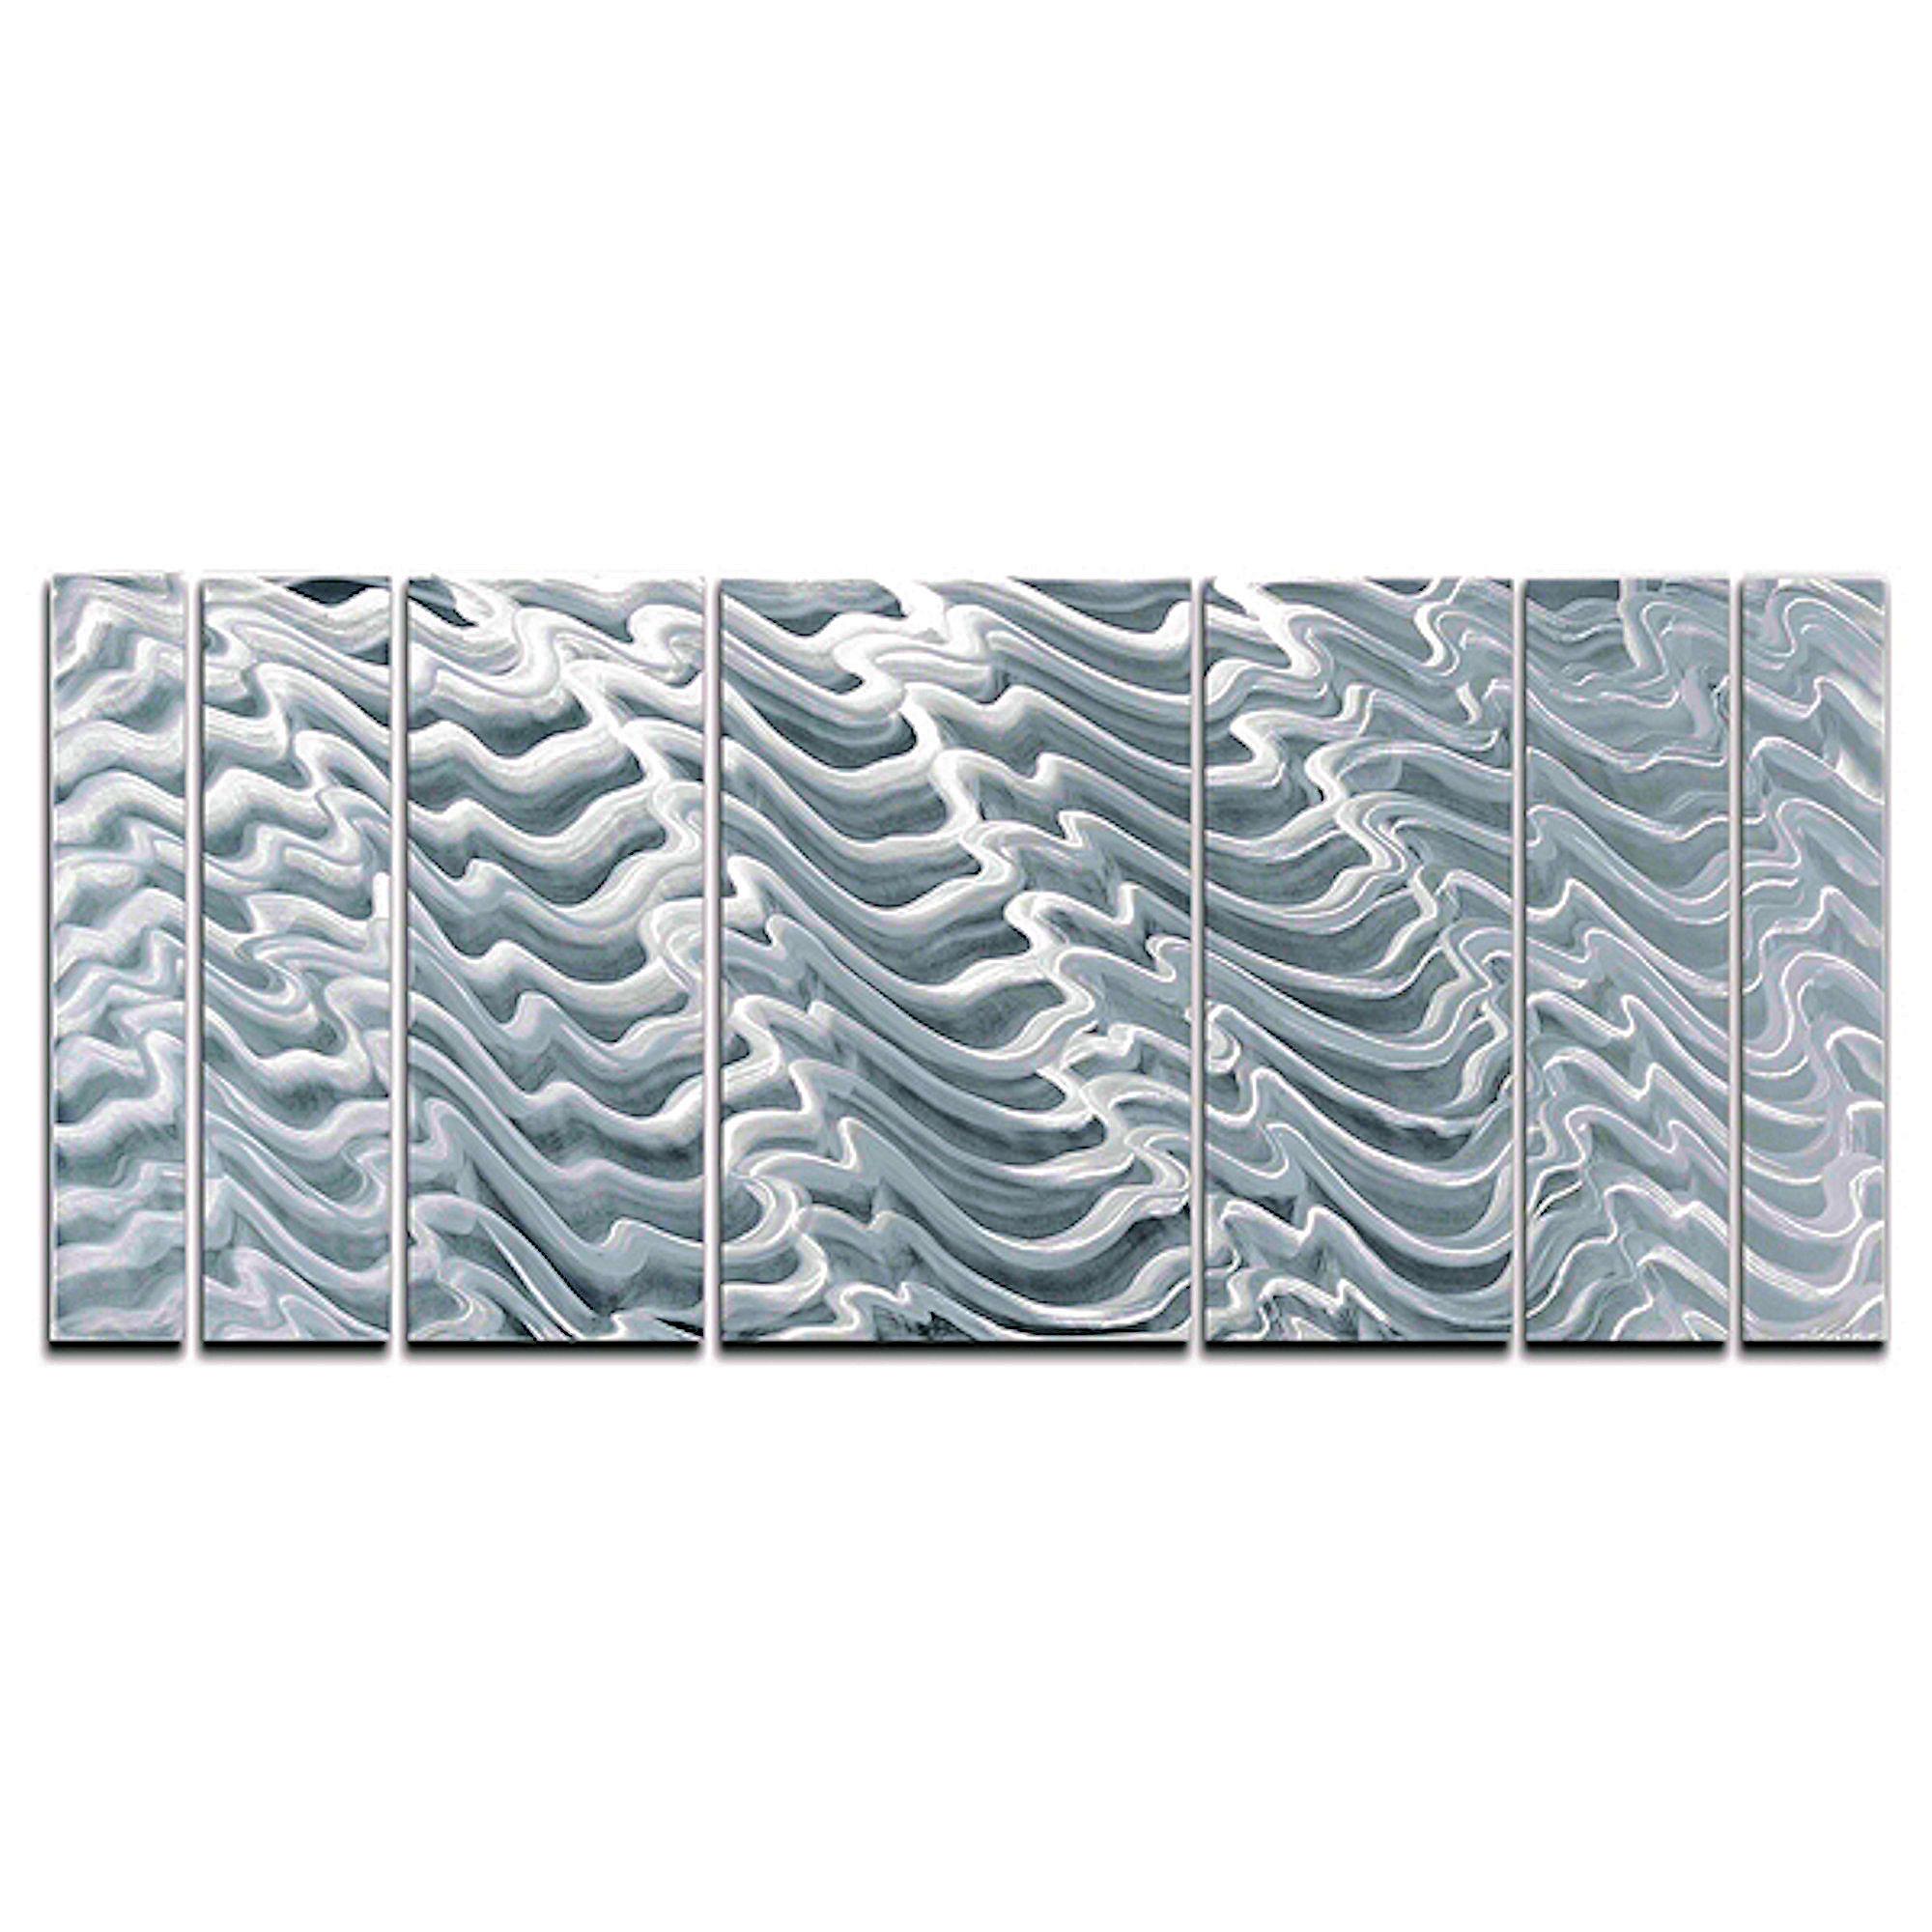 Sebastian R. Aluminum Wall Sculpture Contemporary Original Industrial Modern  - Gray Abstract Sculpture by Sebastian Reiter